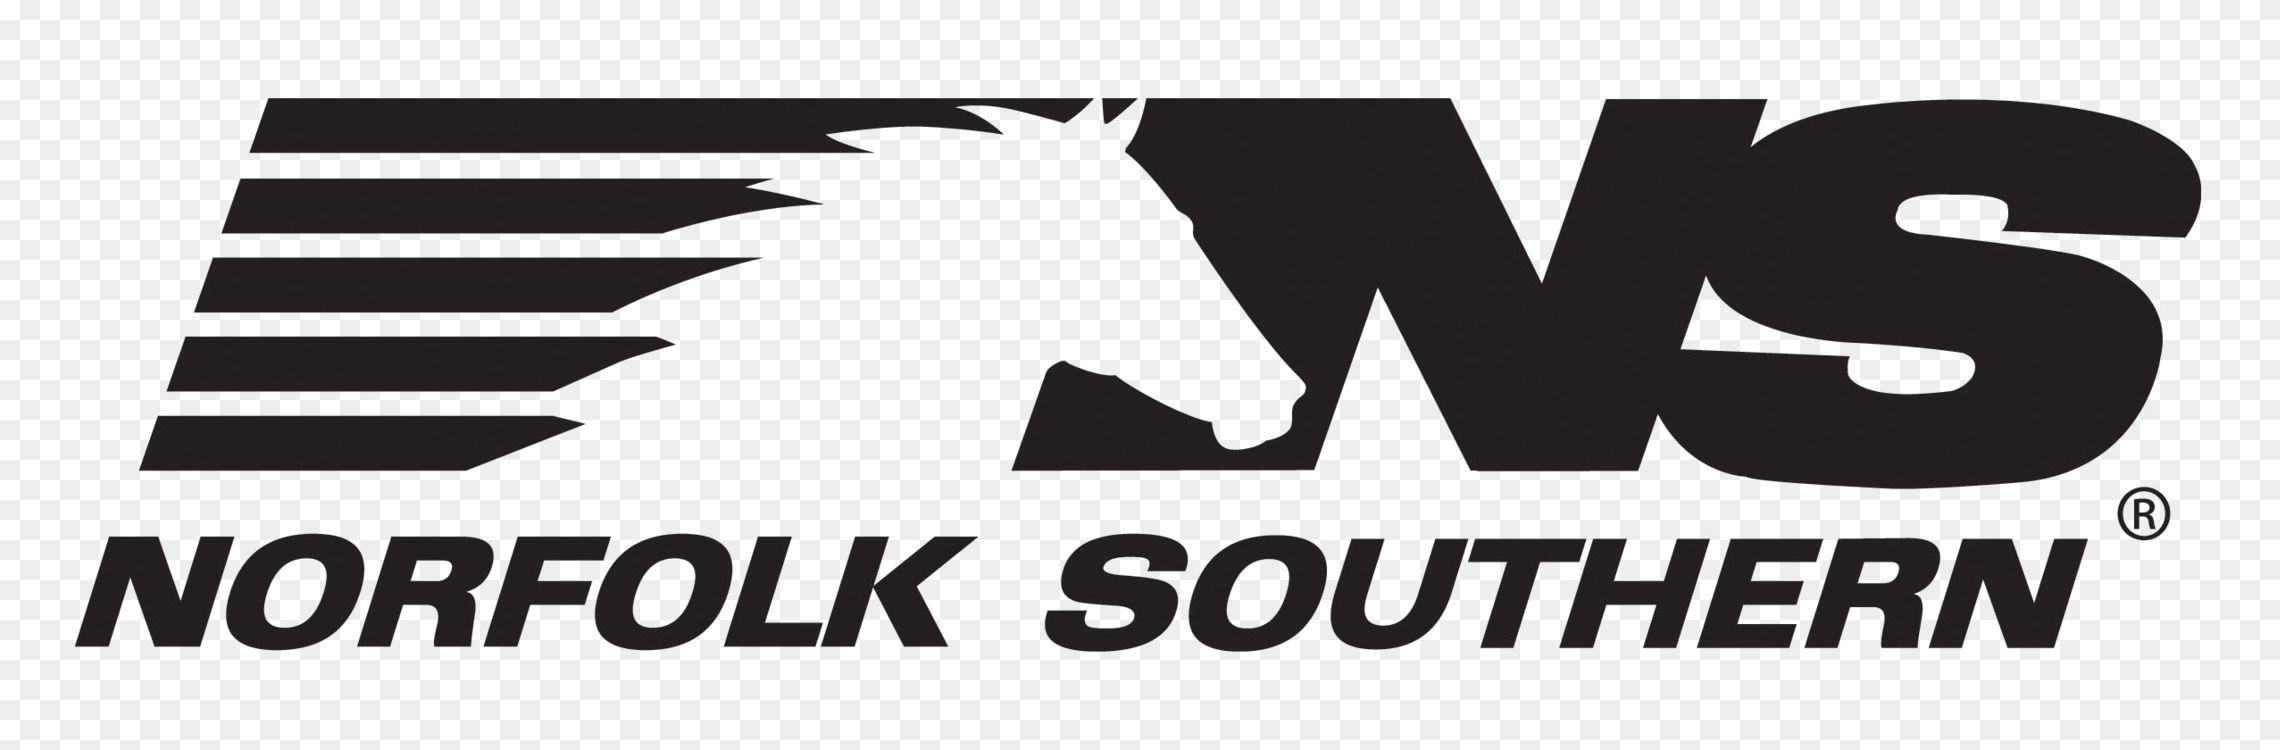 Southern Railway Logo - Logo Norfolk Southern Railway Brand Emblem Free PNG Image